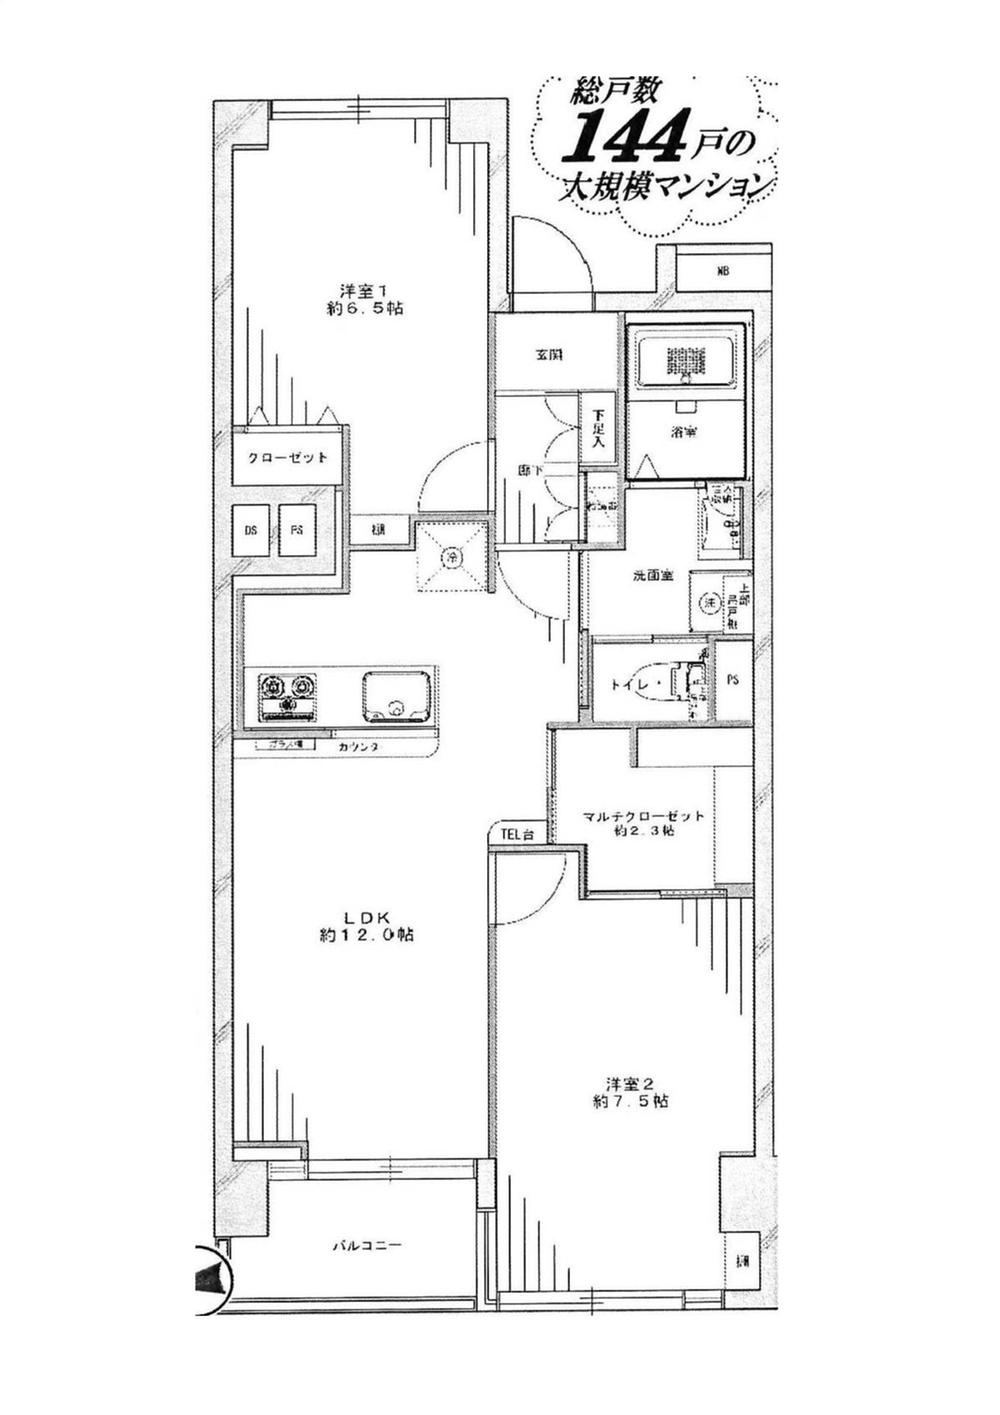 Floor plan. 2LDK, Price 19,800,000 yen, Occupied area 59.85 sq m , Balcony area 3.59 sq m